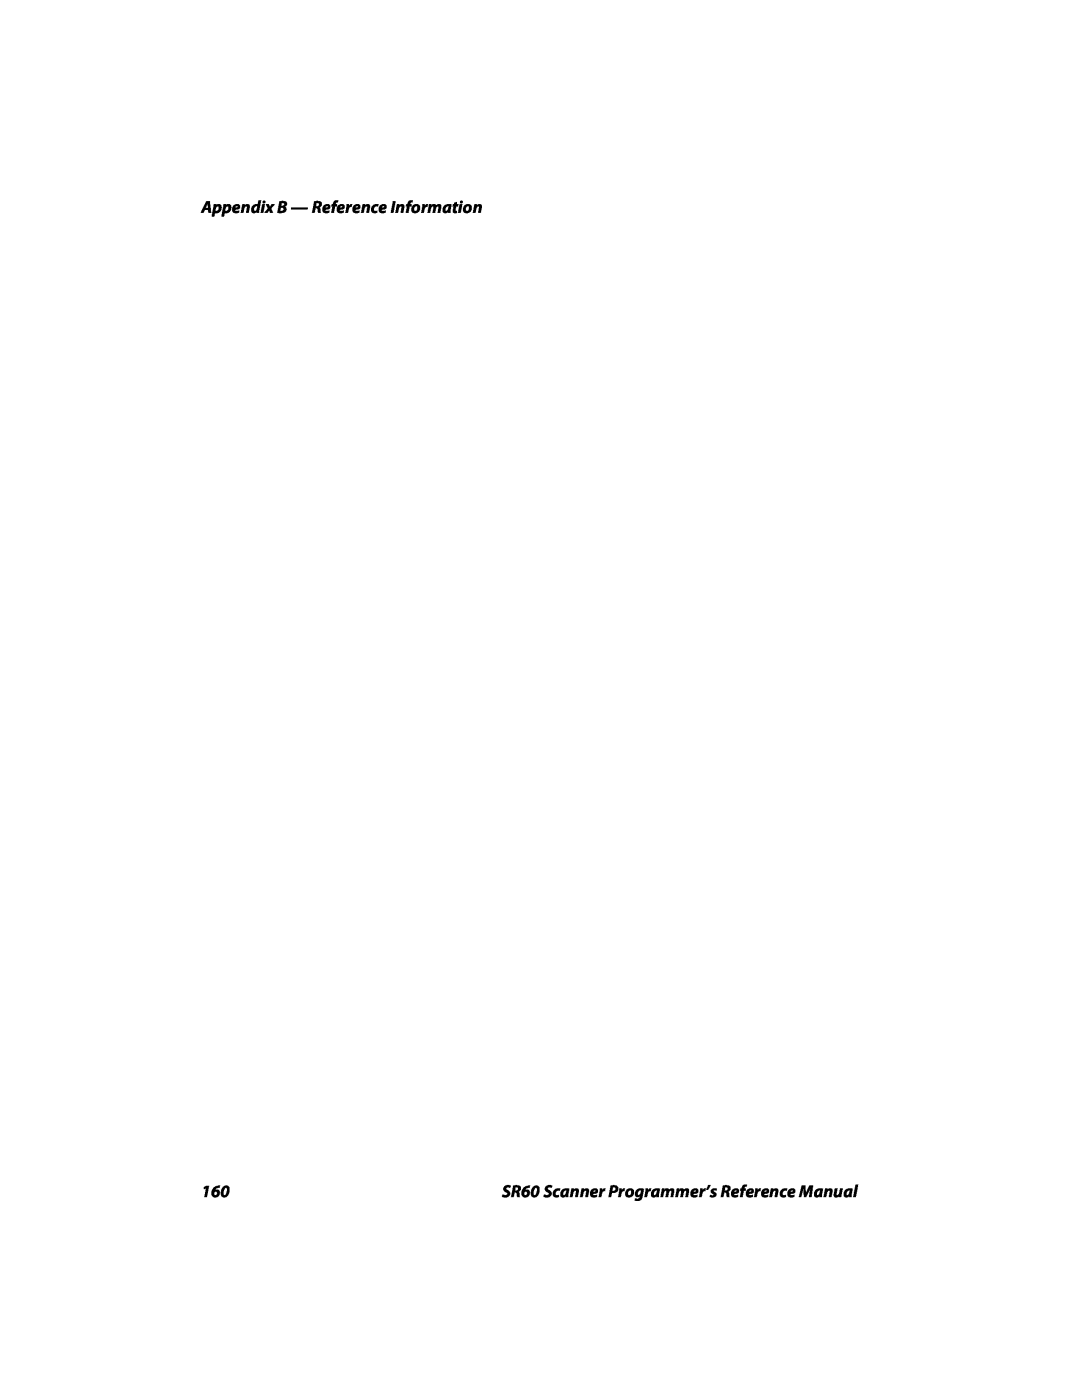 Intermec manual Appendix B - Reference Information, SR60 Scanner Programmer’s Reference Manual 